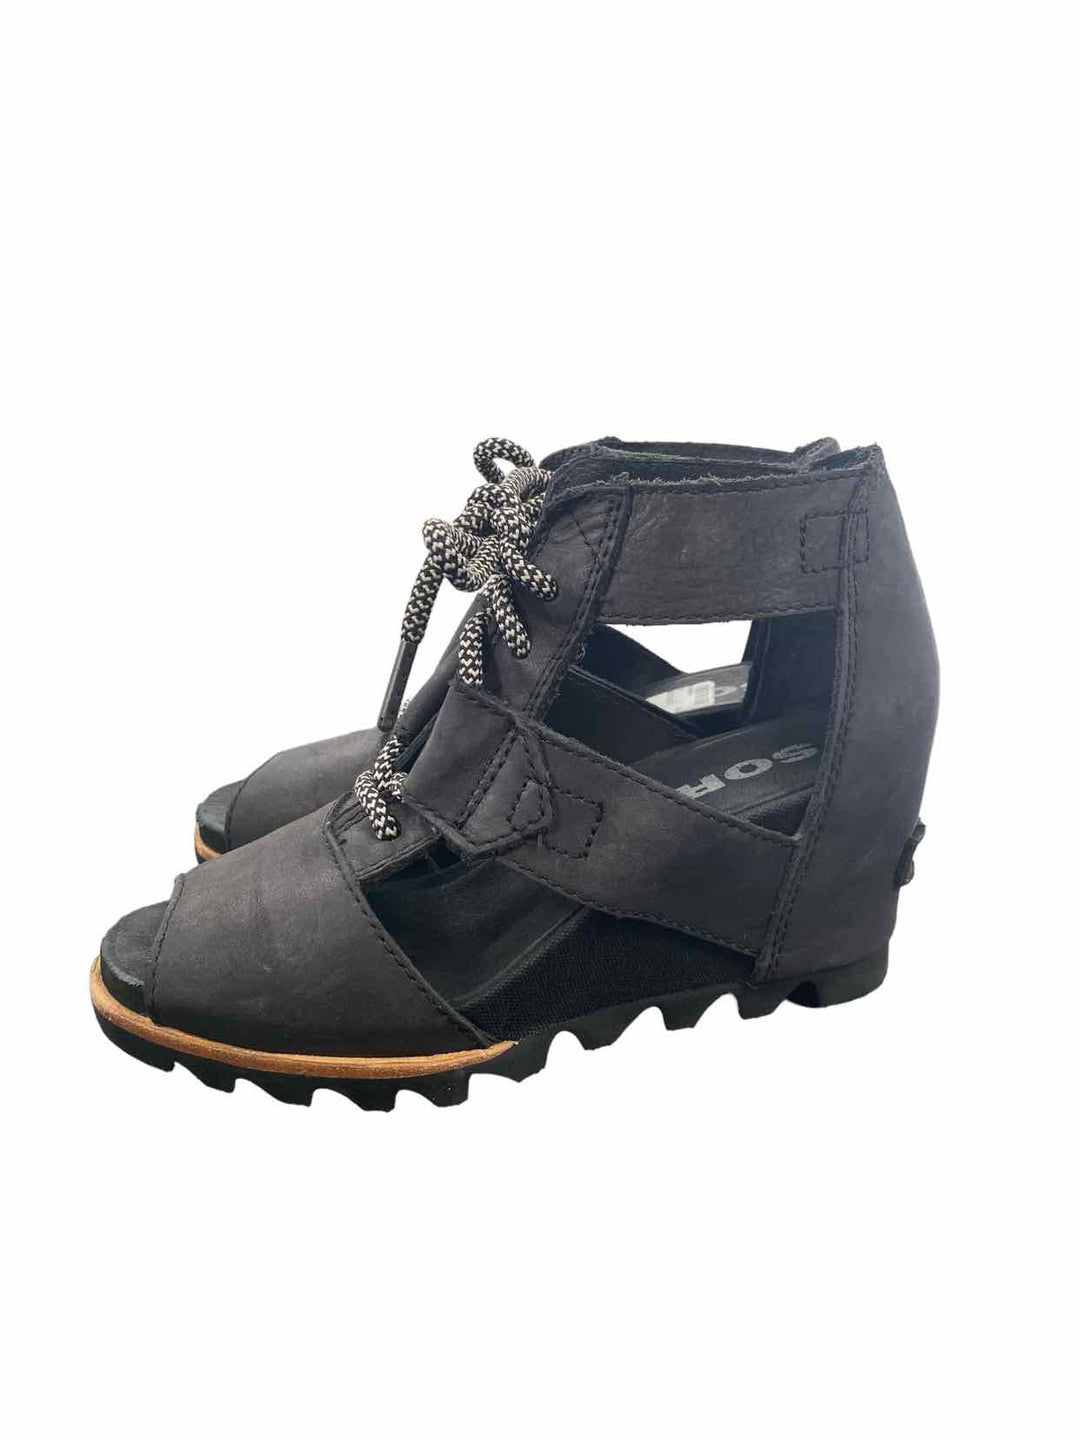 Sorel Shoe Size 6 Black Sandals